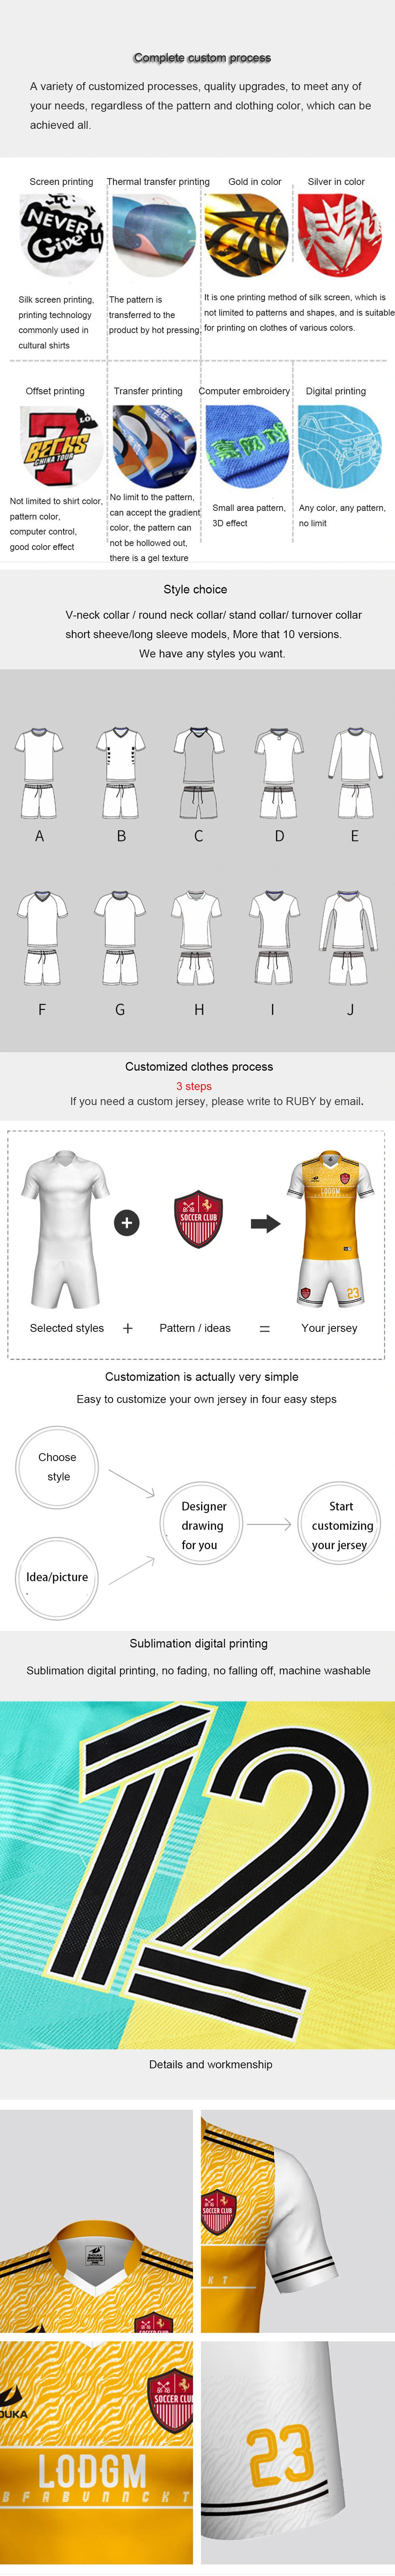 Top Sale Football Sports Jersey Wear High Quality Design Custom Soccer Uniform Jersey Set